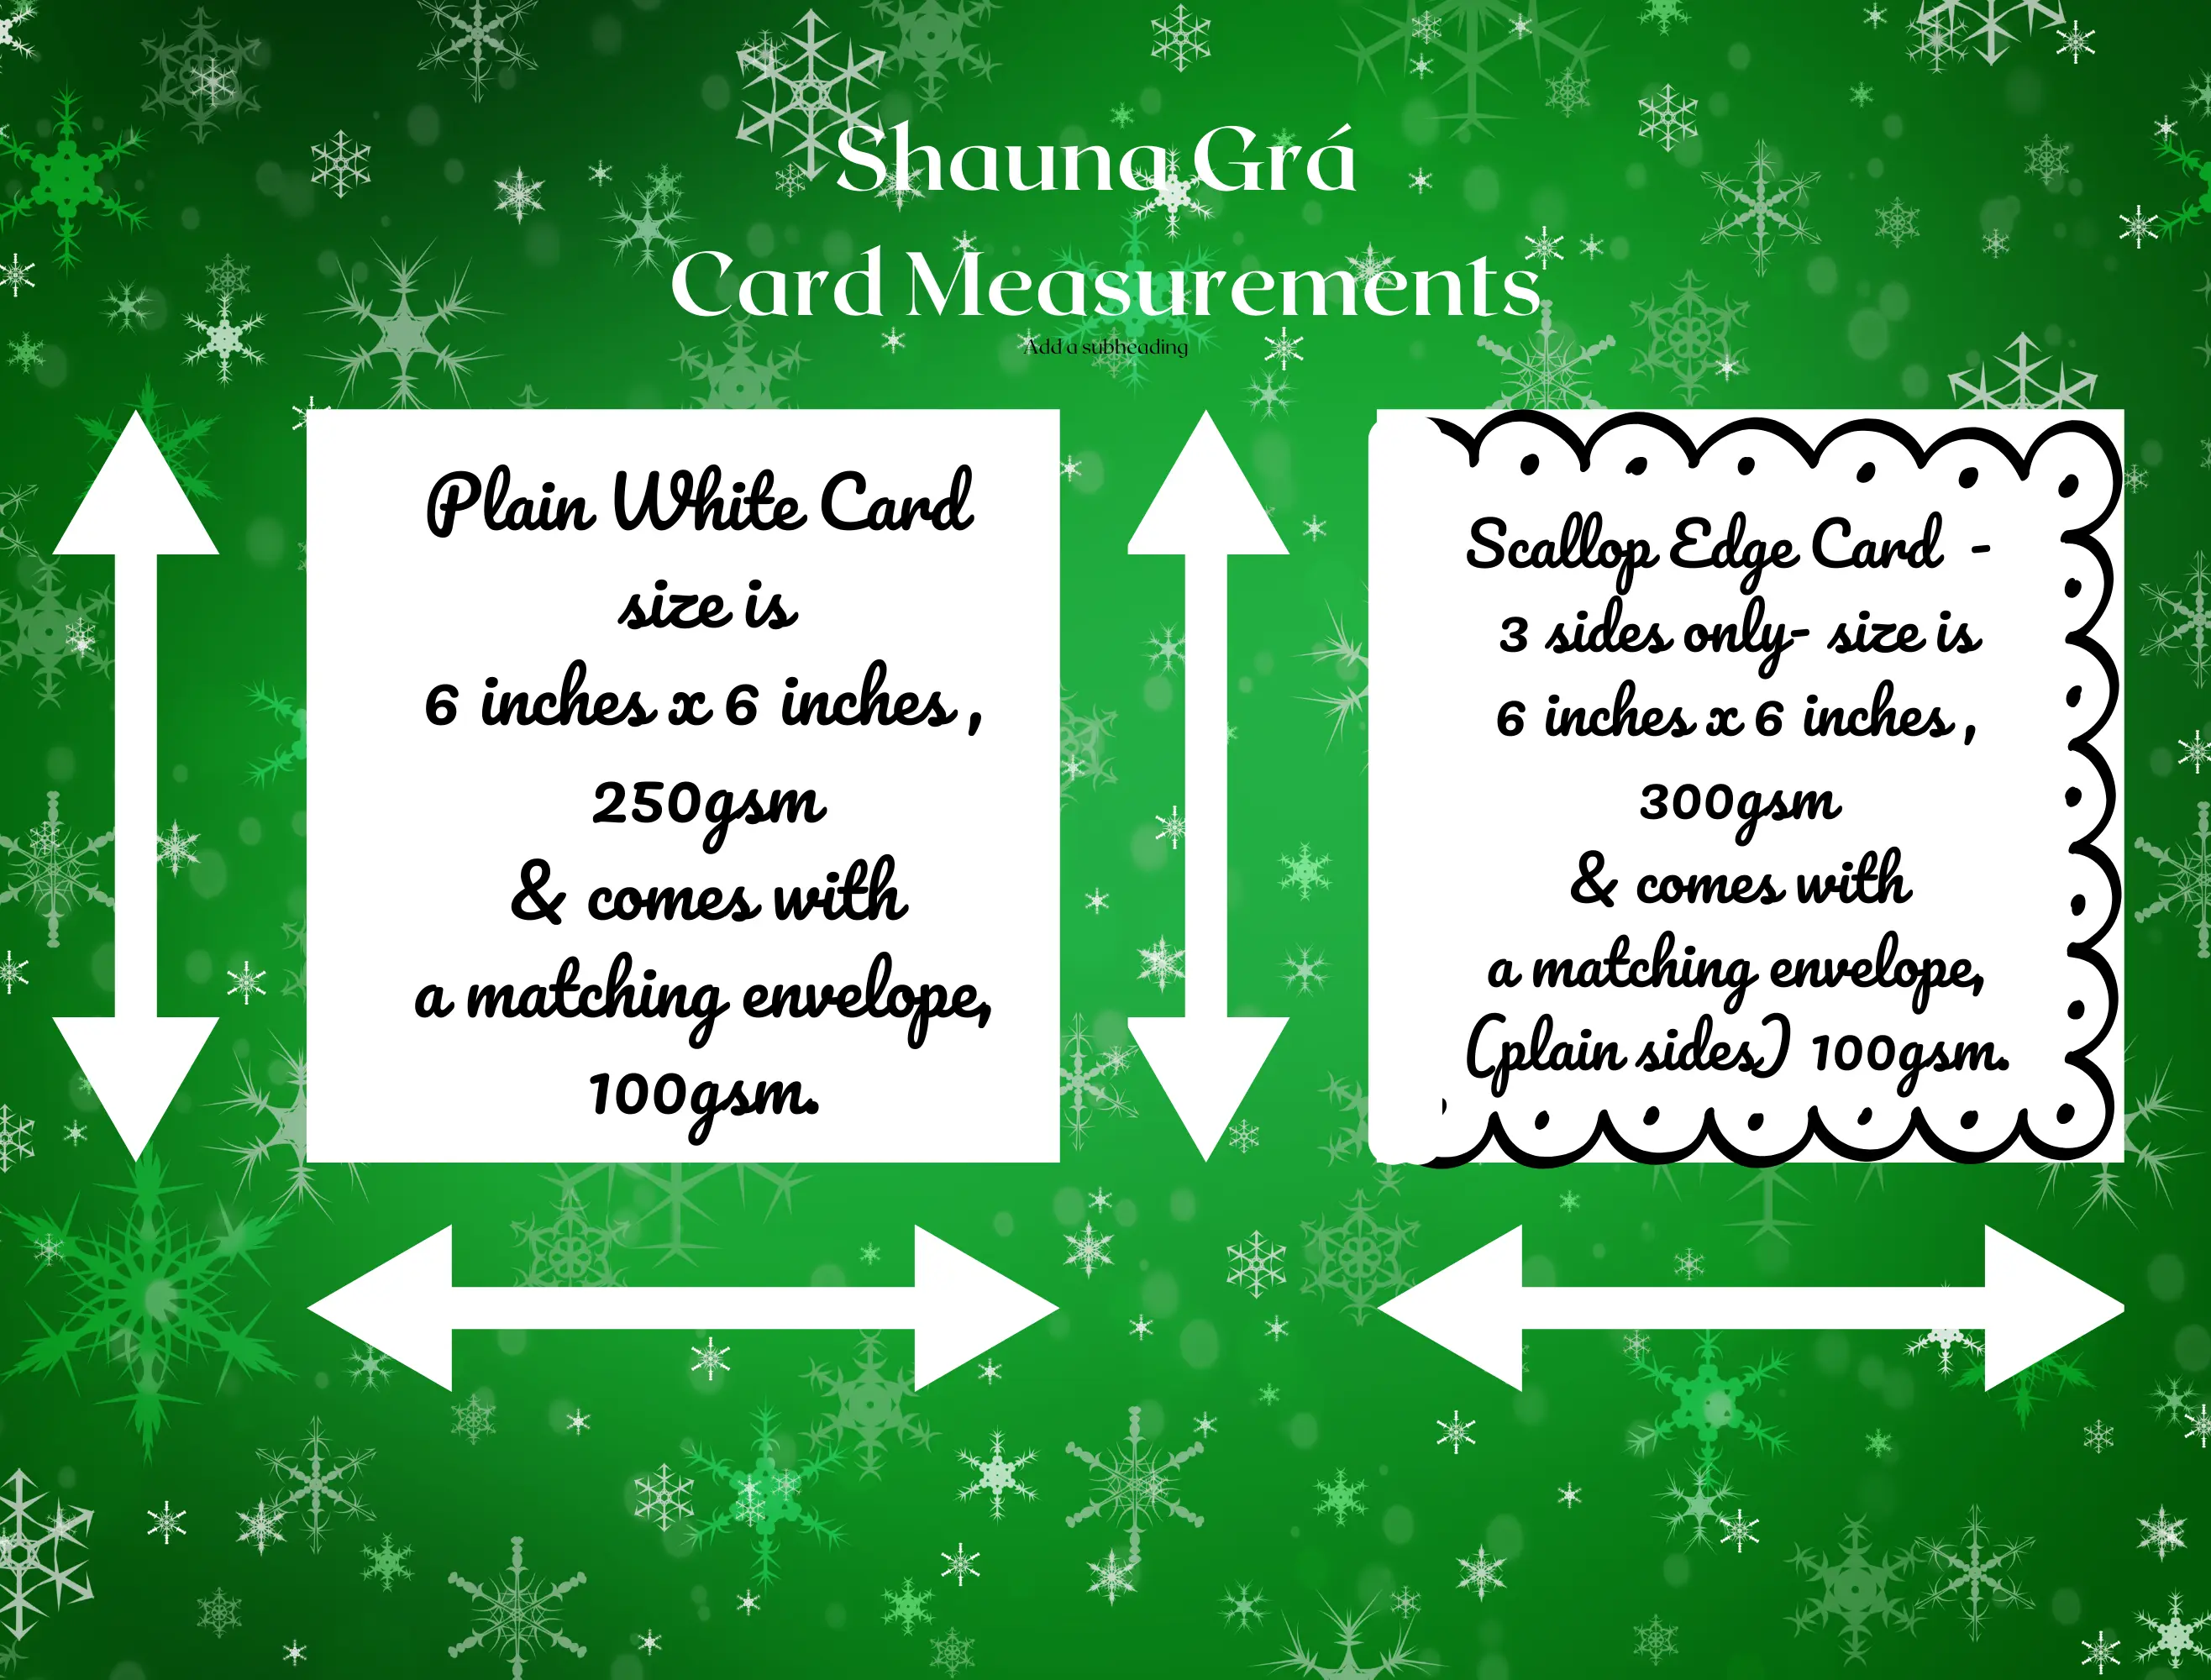 Irish language christmas cards pack of 10 nollaig shona duit